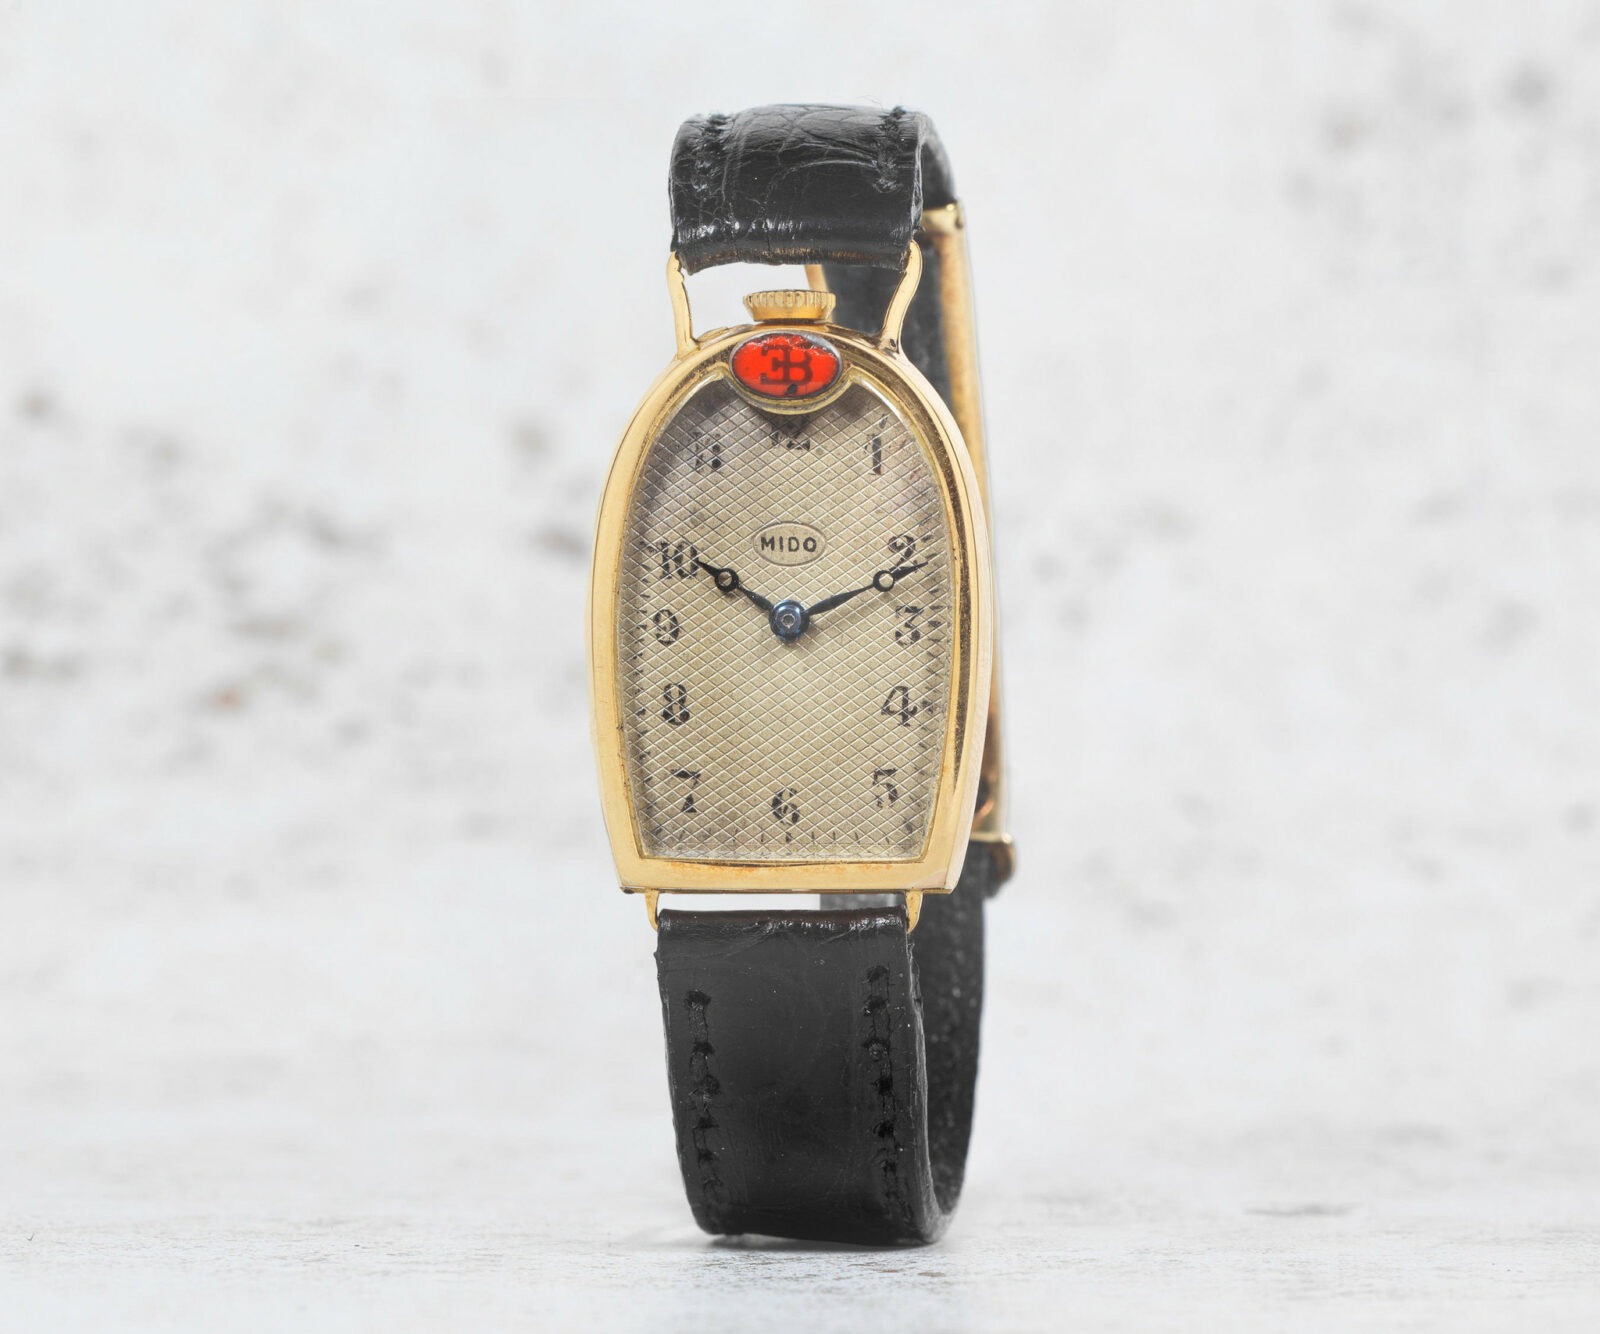 Mido Bugatti antique watch